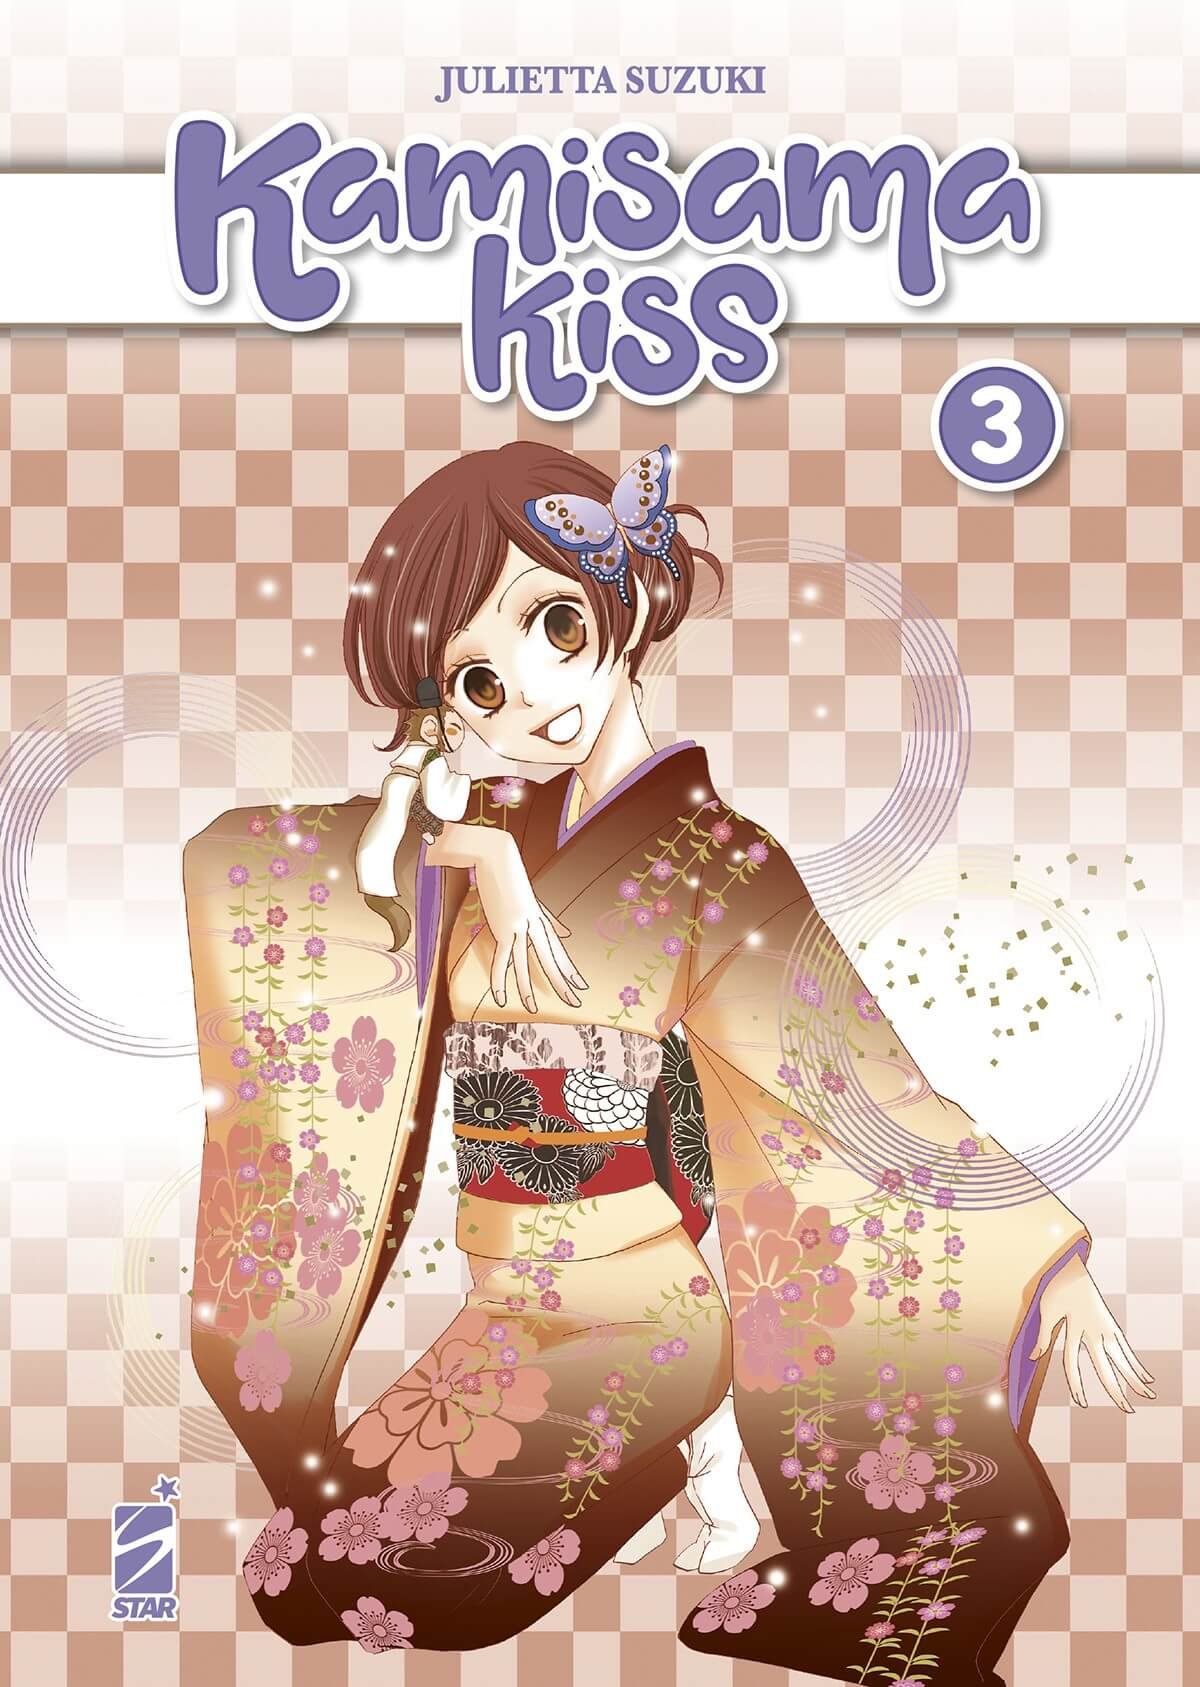 Kamisama Kiss 3, parmi les sorties mangas Star Comics du 8 mars 2023.